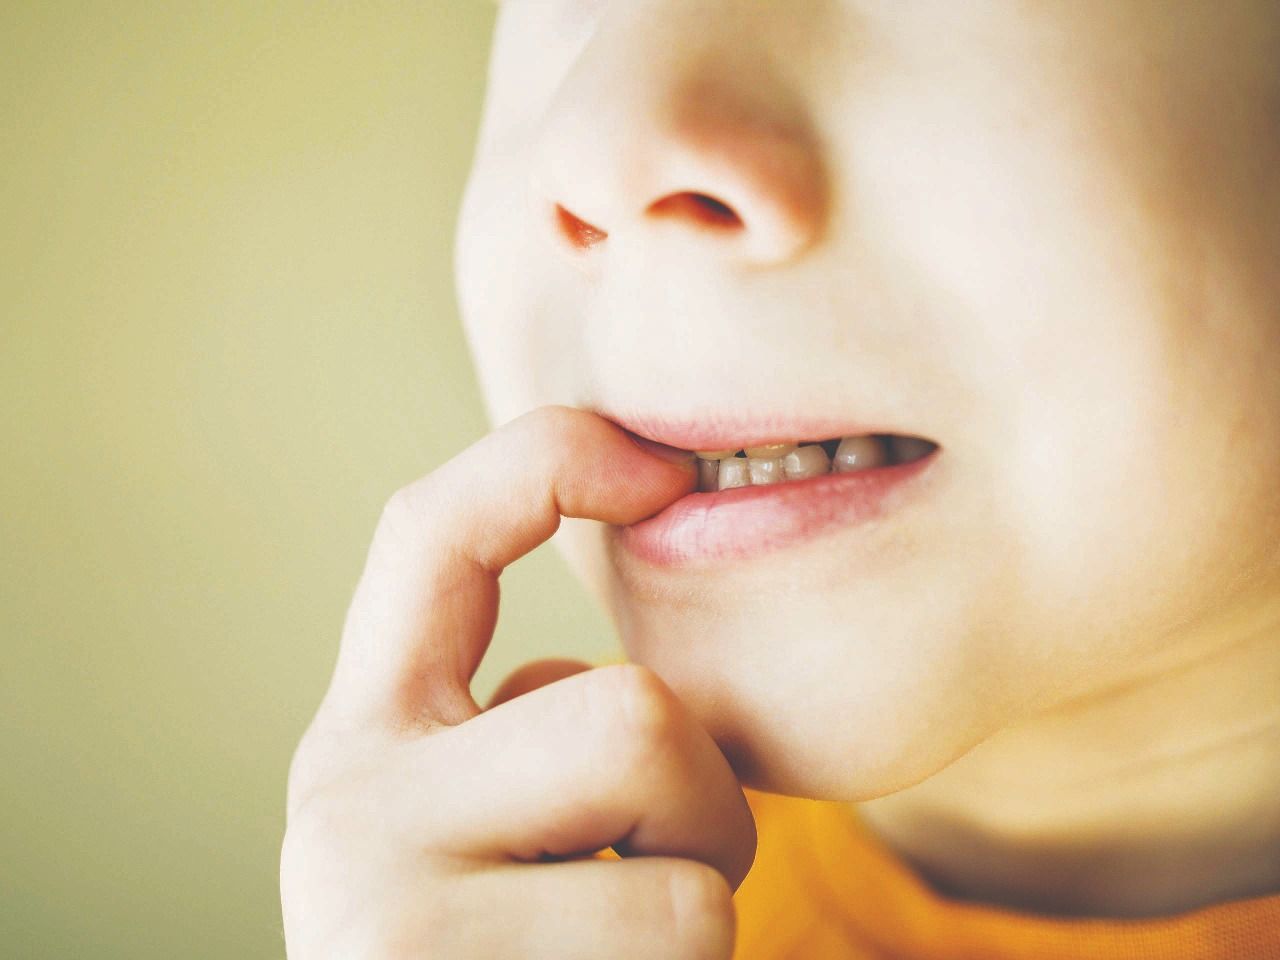 Nail-biting habit of children